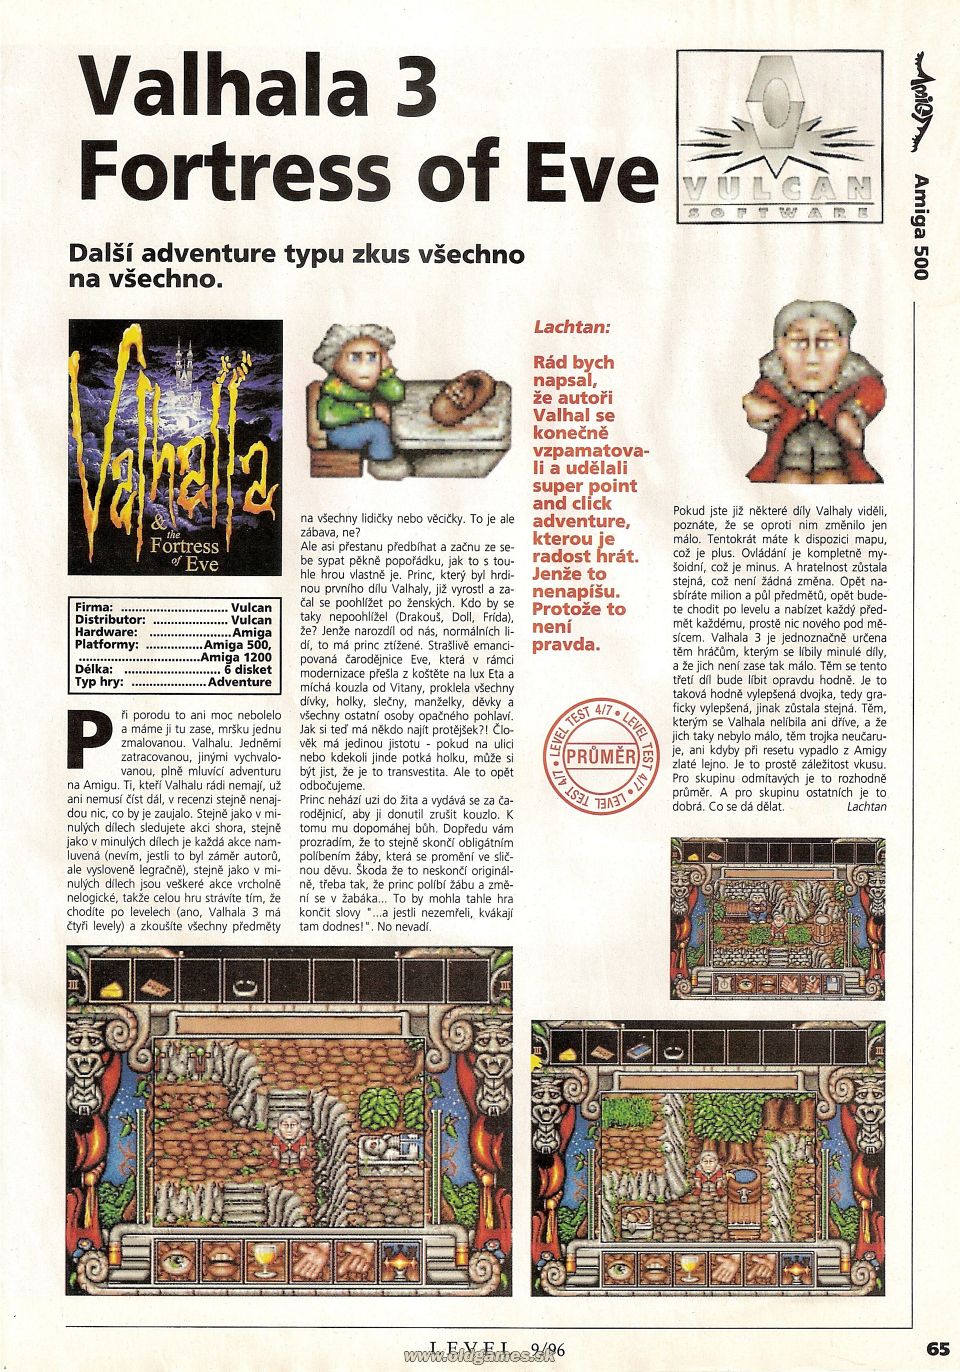 Valhala 3: Fortress of Eve (Amiga)